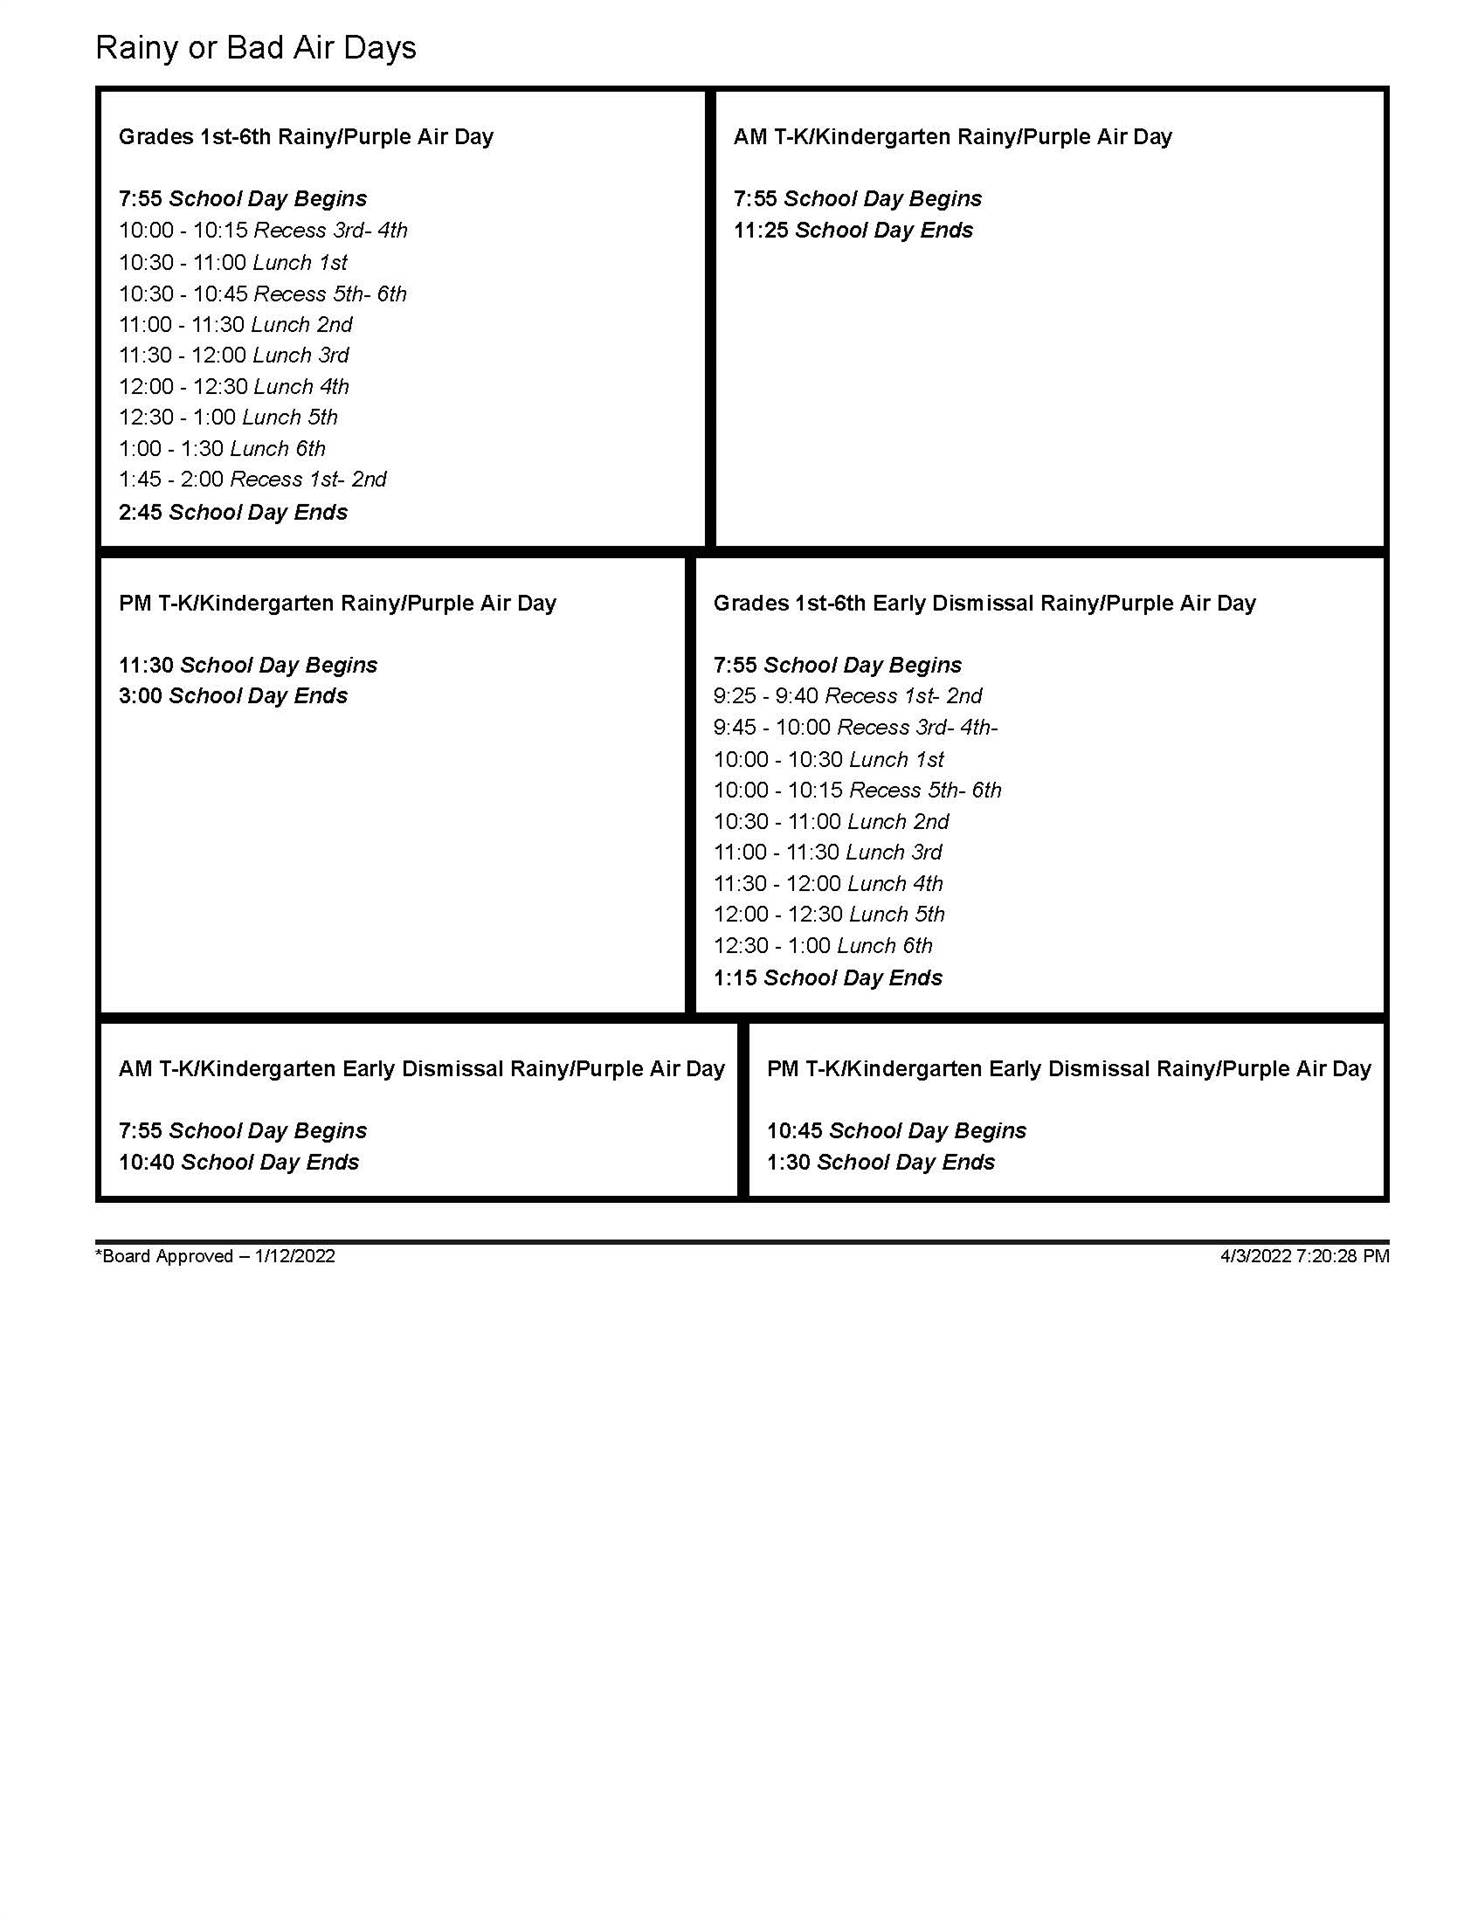 CEHS Area Bell Schedule - full text downloadable below